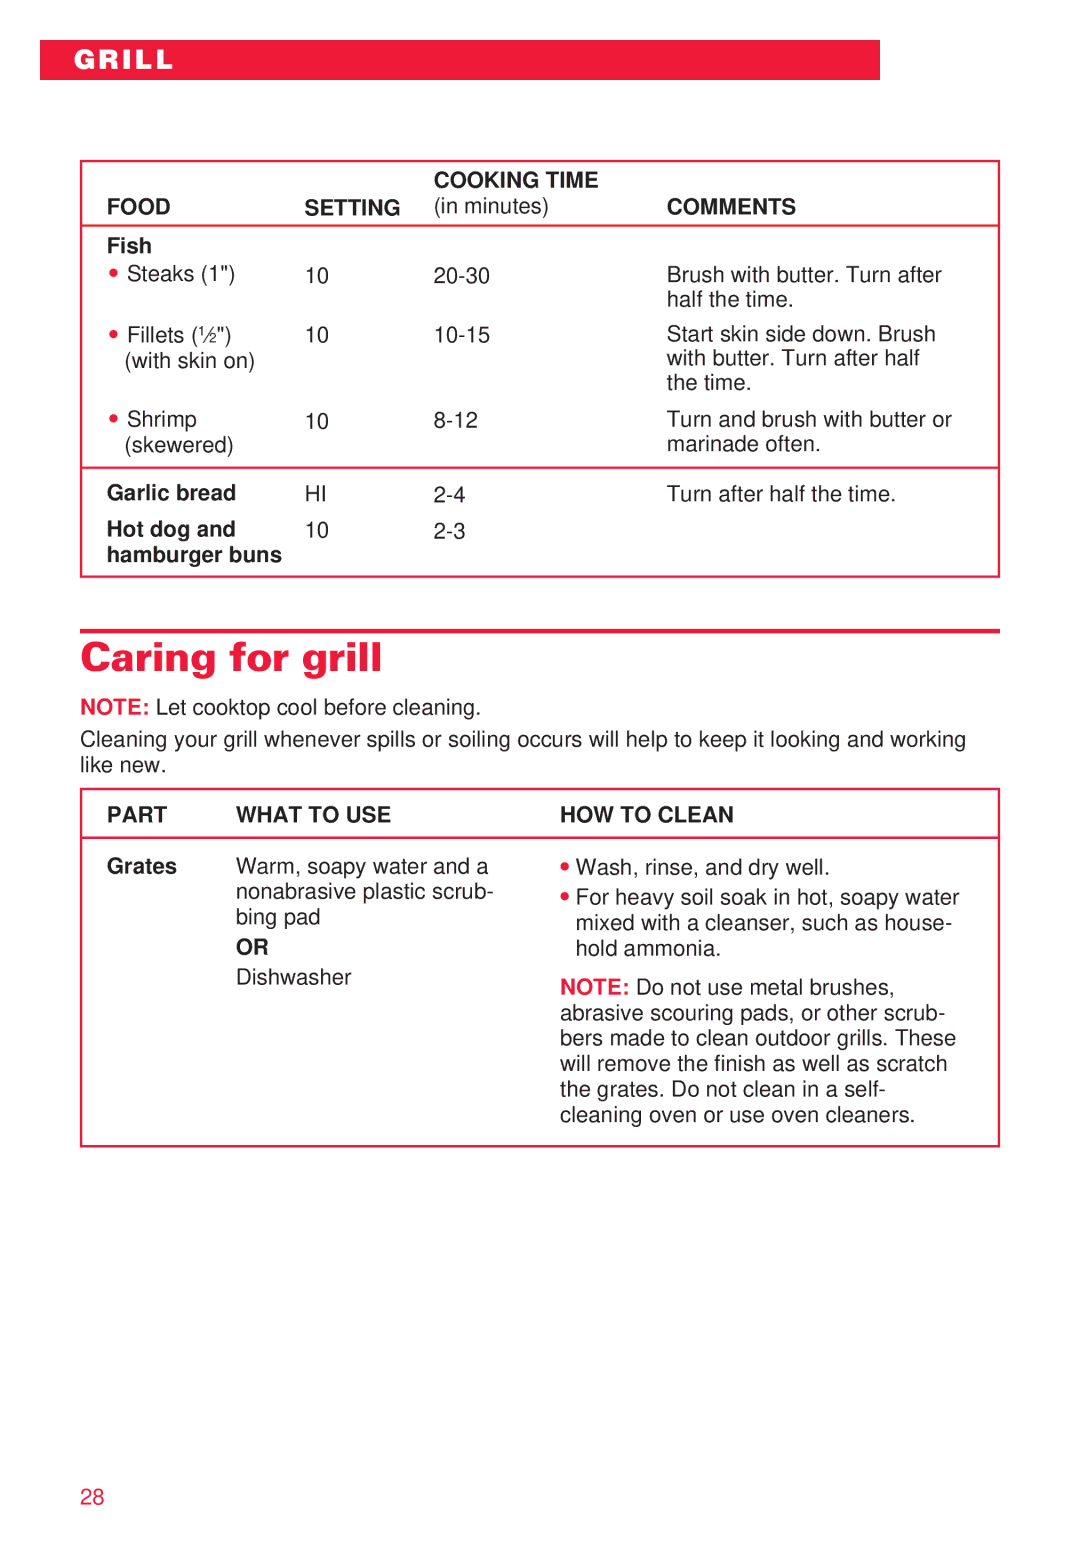 Whirlpool RC8700ED warranty Caring for grill, Fish, Garlic bread, Hot dog Hamburger buns, Grates 